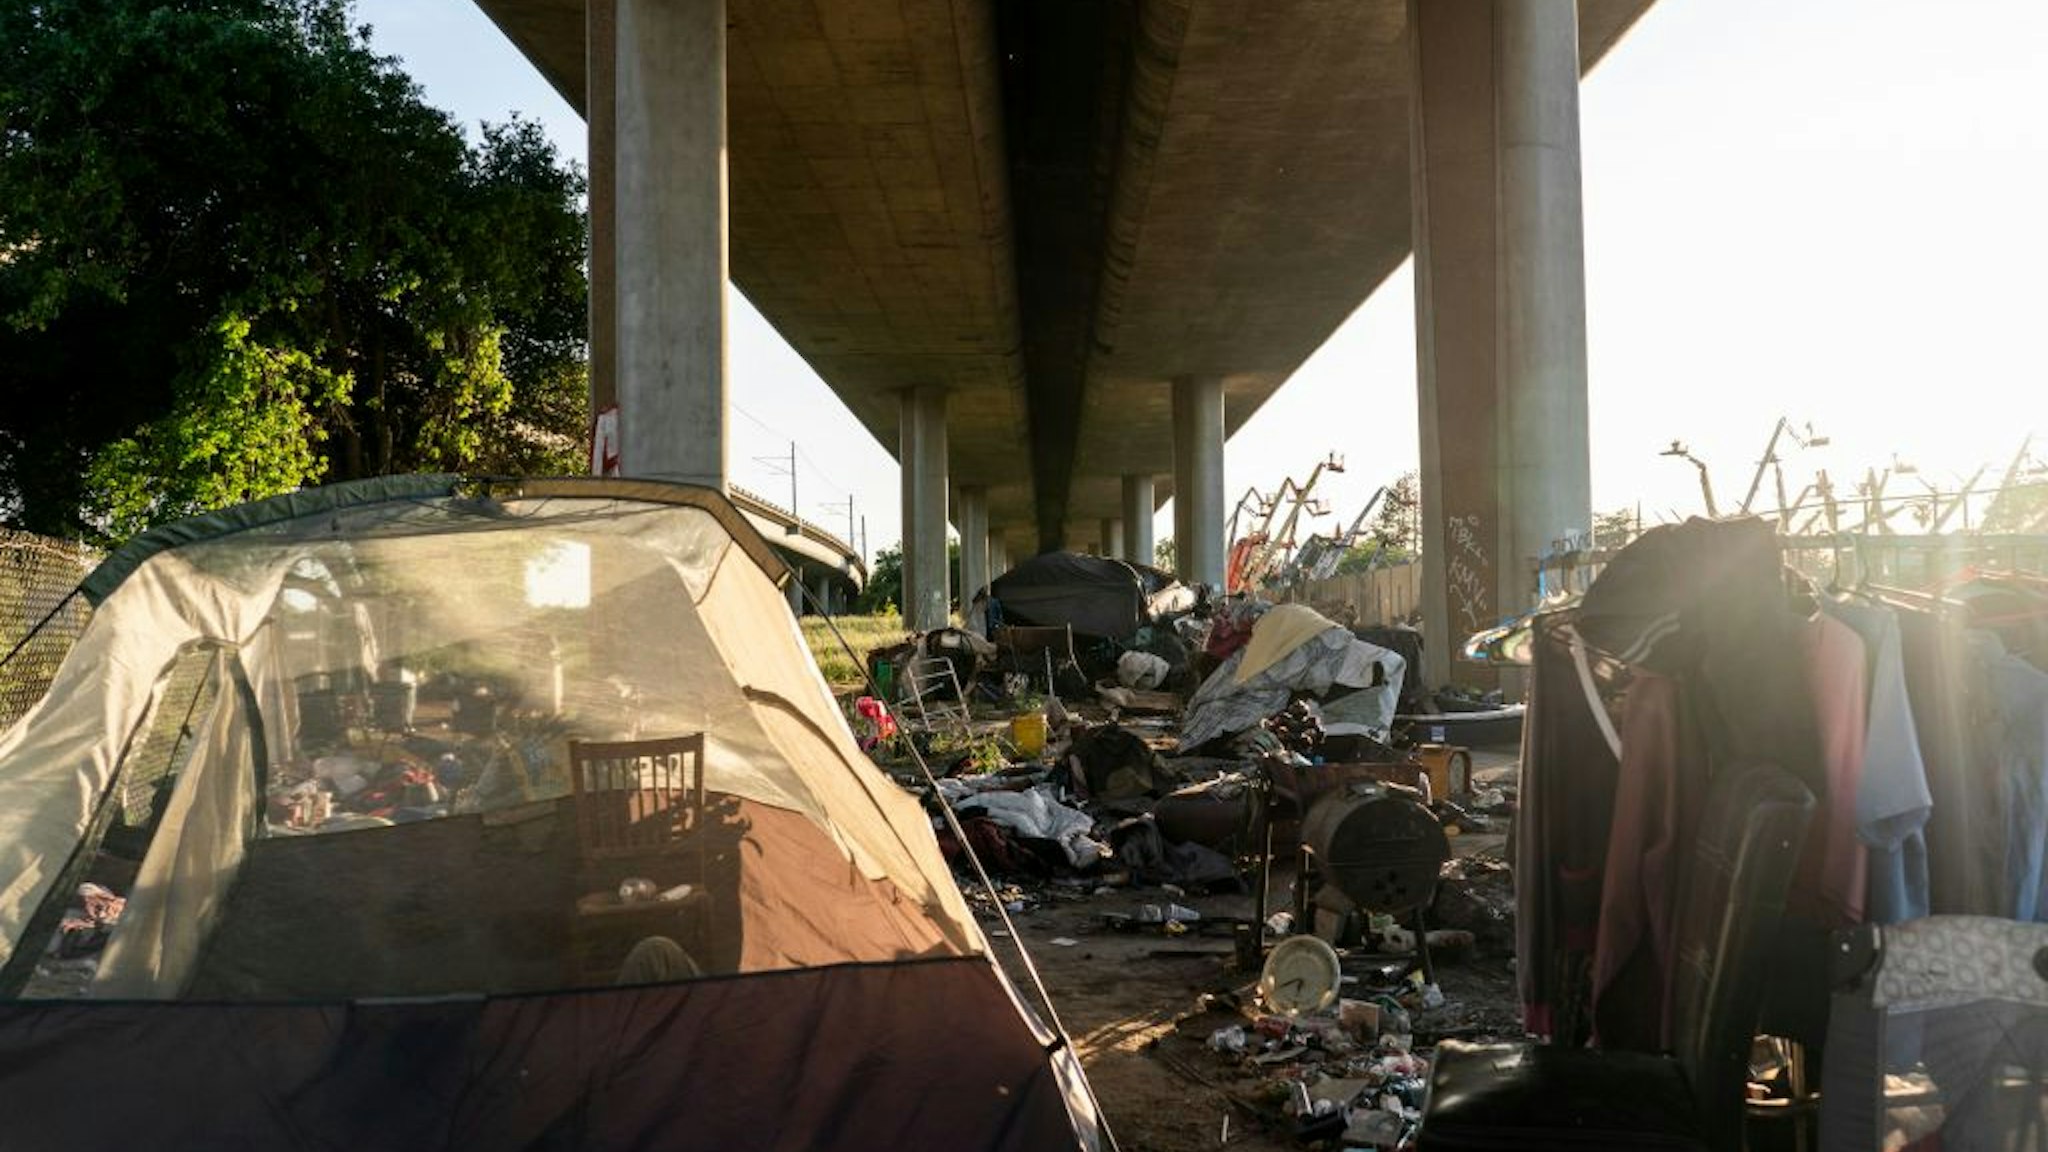 SACRAMENTO, CALIFORNIA - MARCH 30, 2022: Homeless encampments of tents hidden underneath Route I-80 along Roseville Road in Sacramento, California Wednesday March 30, 2022. (Melina Mara/The Washington Post via Getty Images)